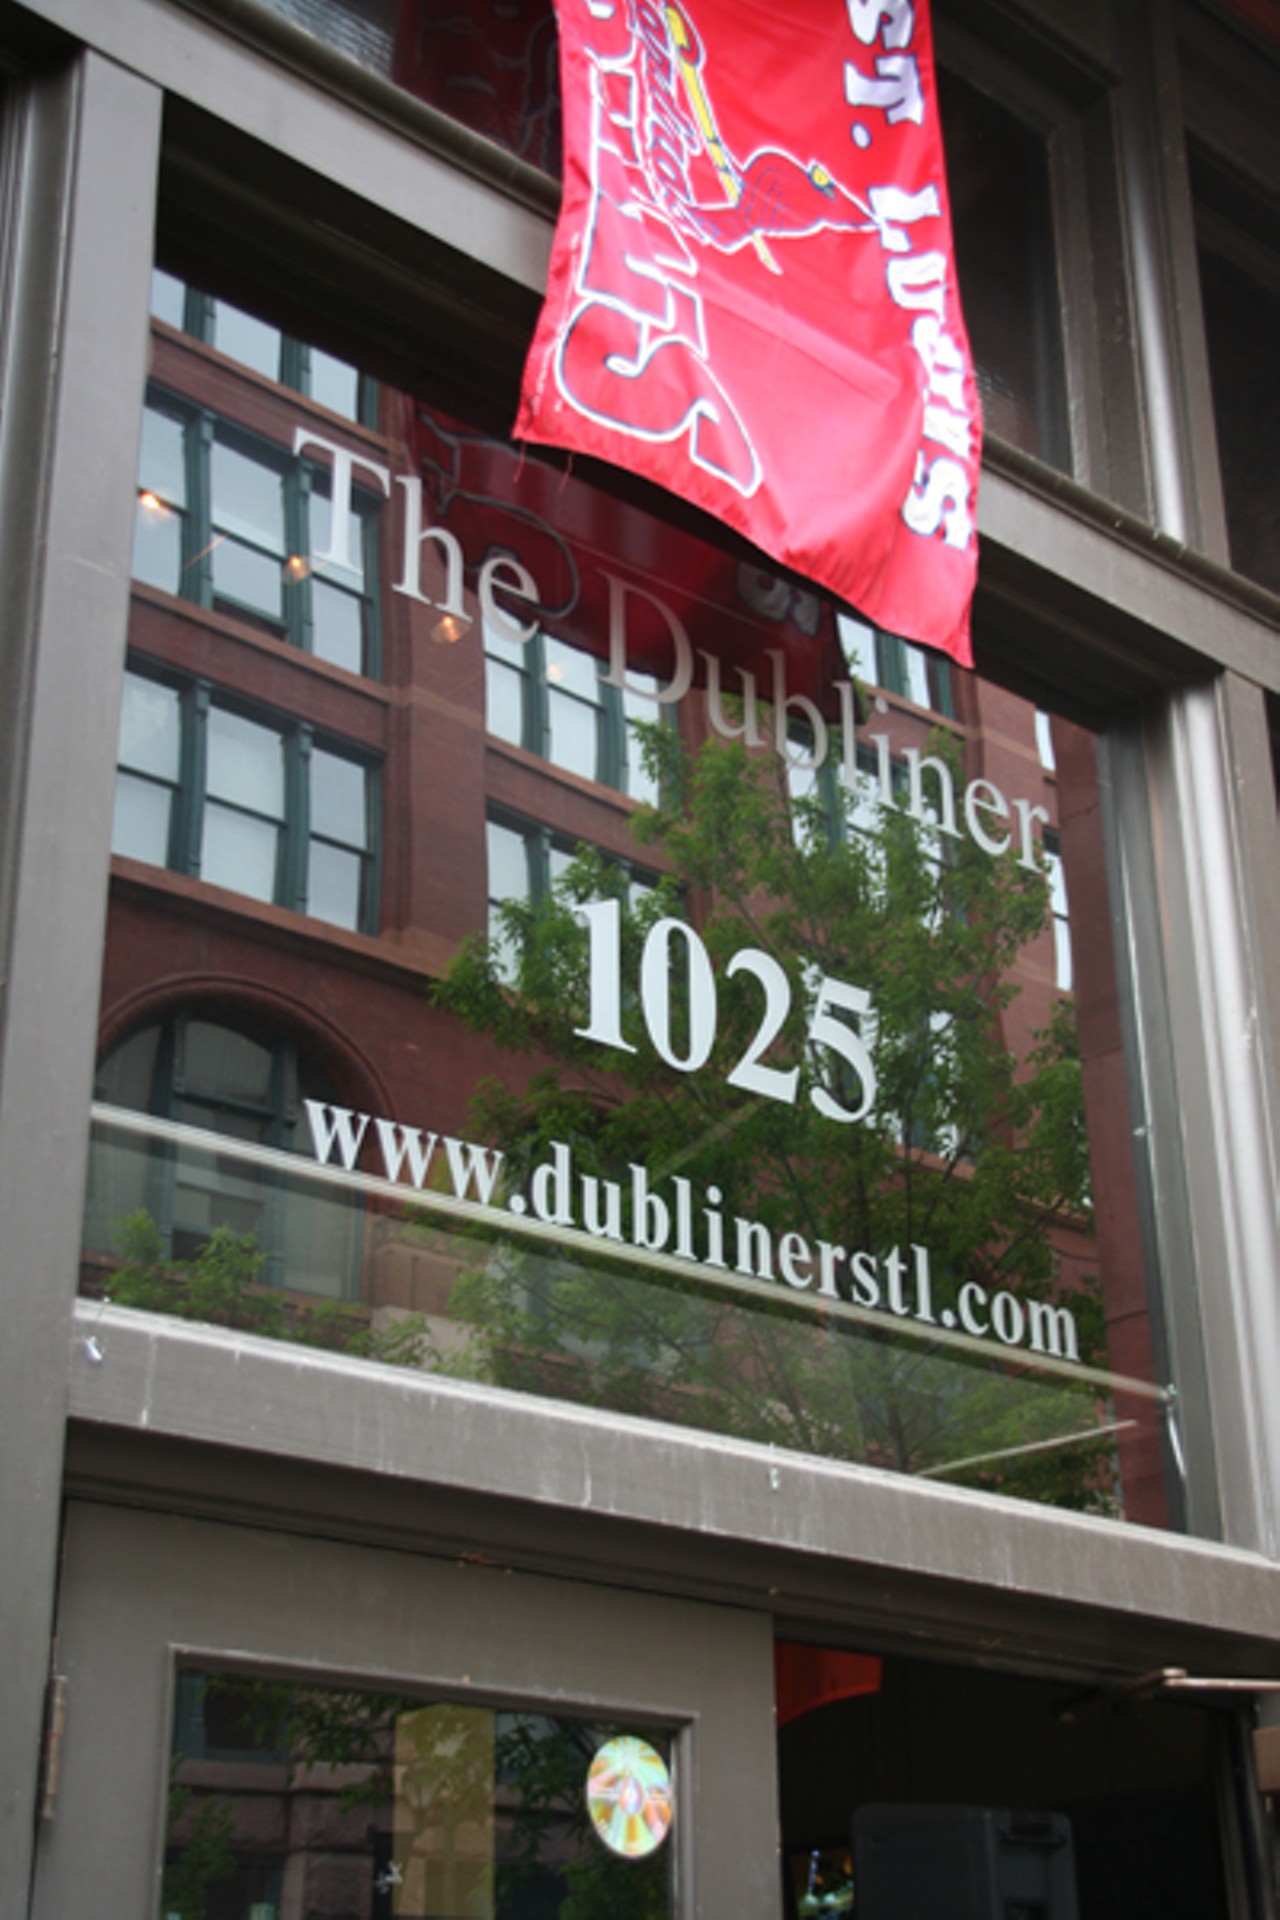 The Dubliner! On Washington Avenue.